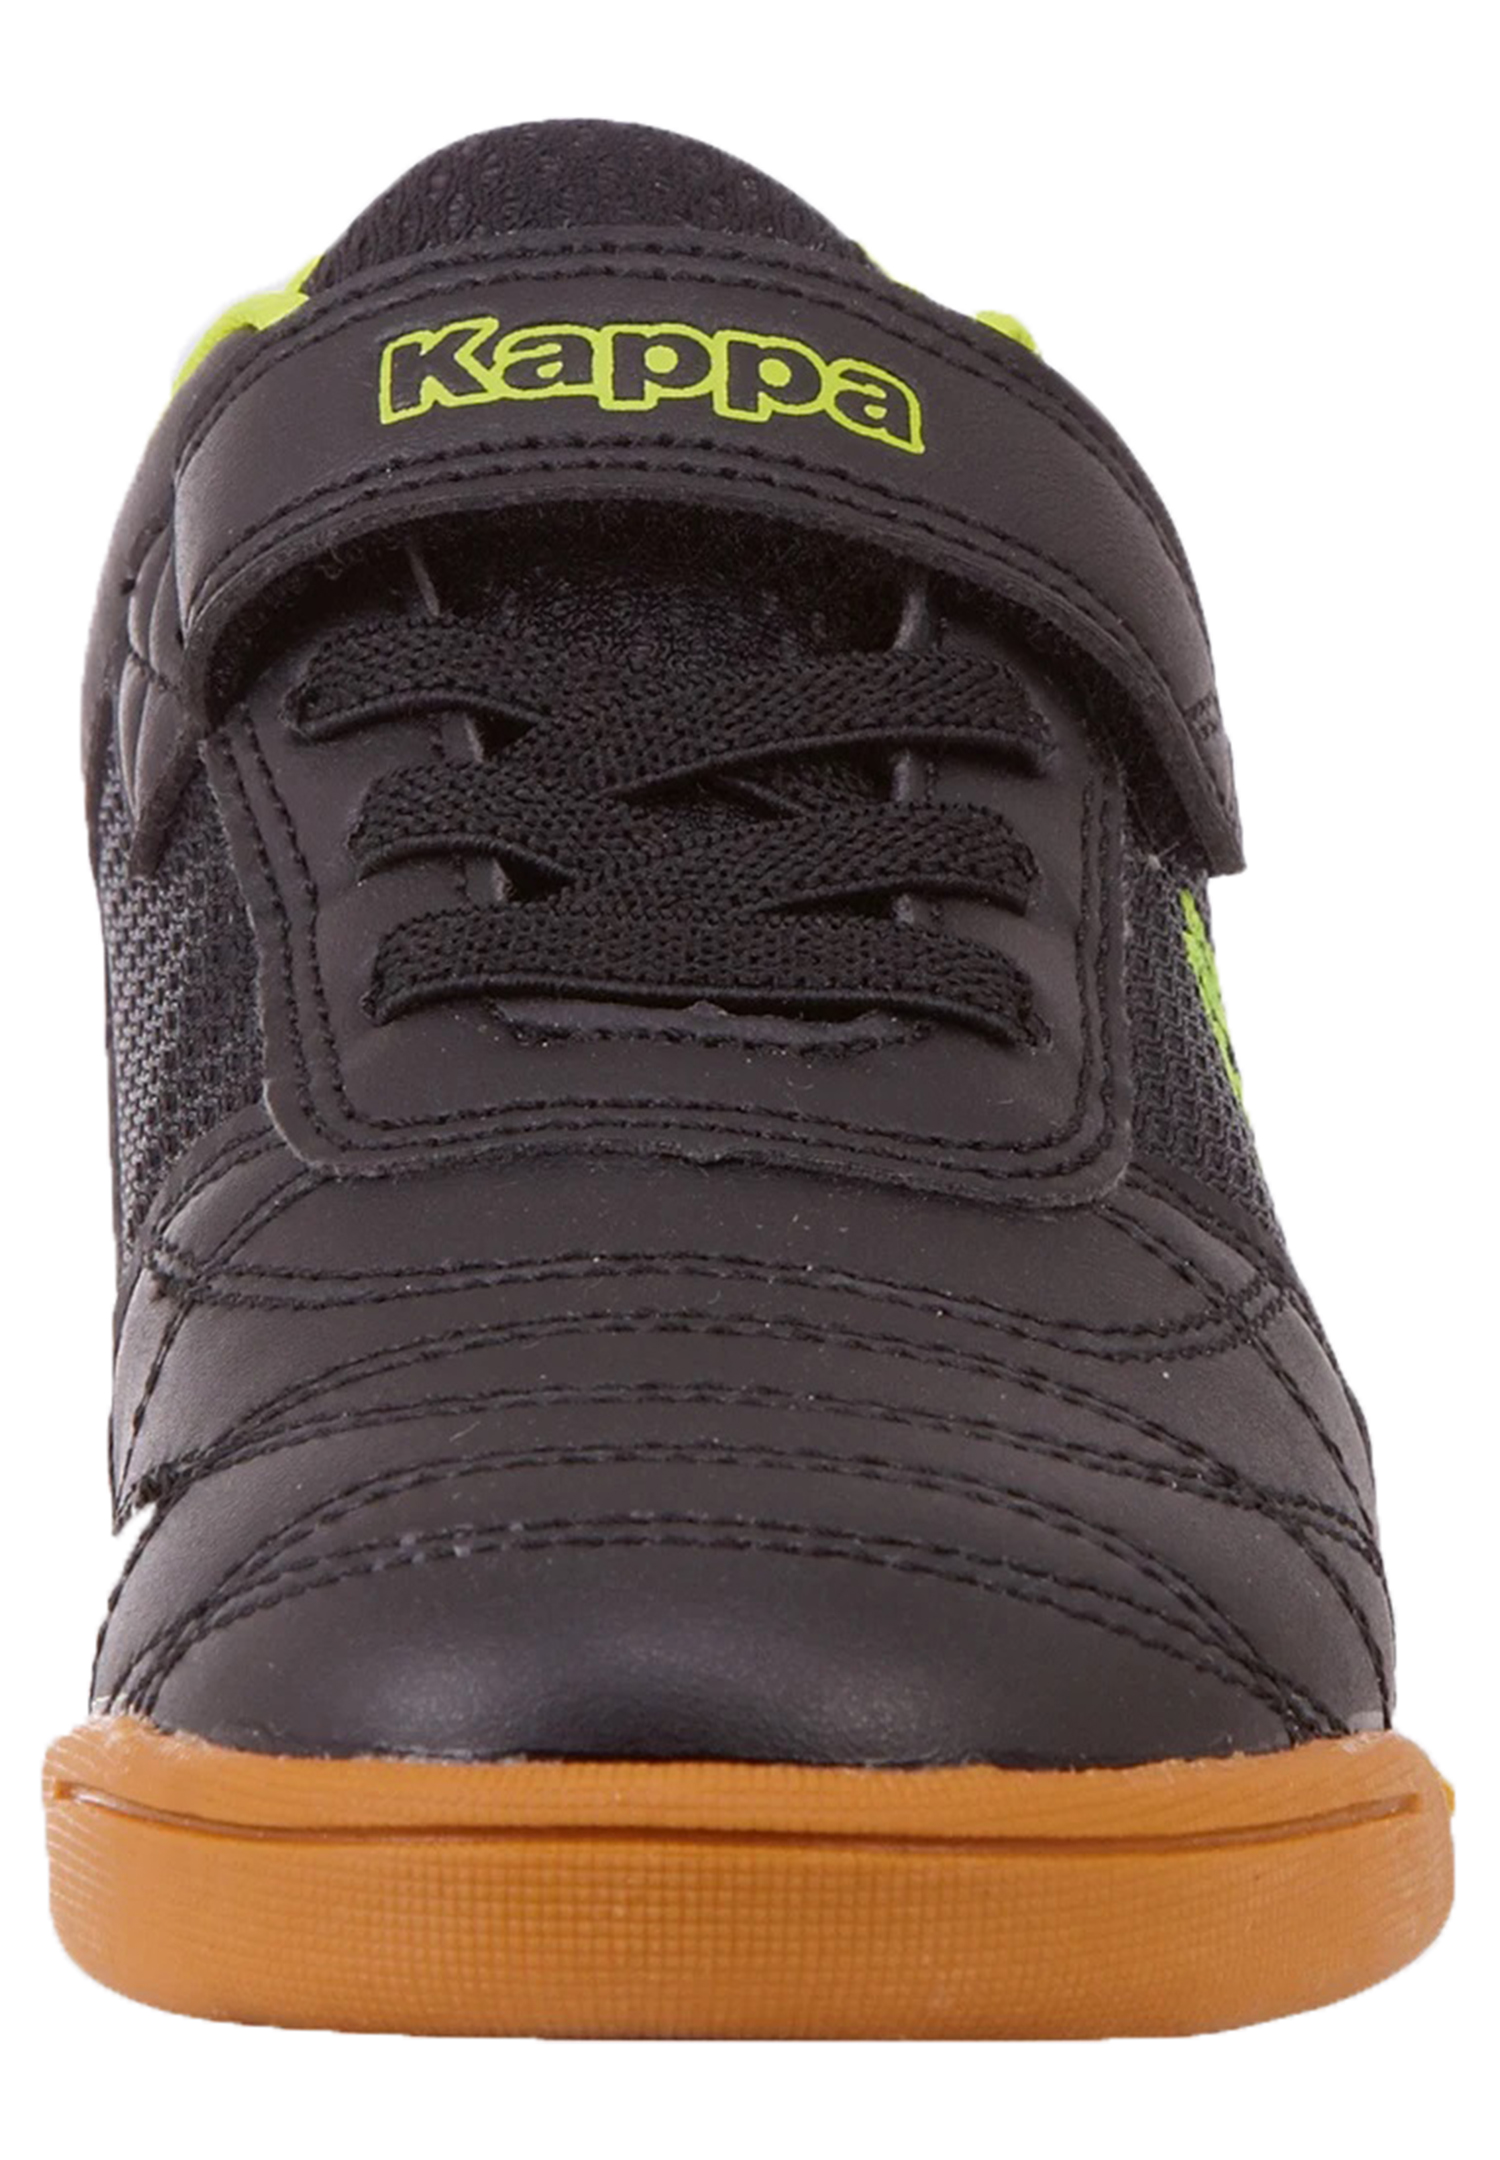 Kappa Kinder Sneaker Turnschuh 260765K 1140 schwarz/gelb